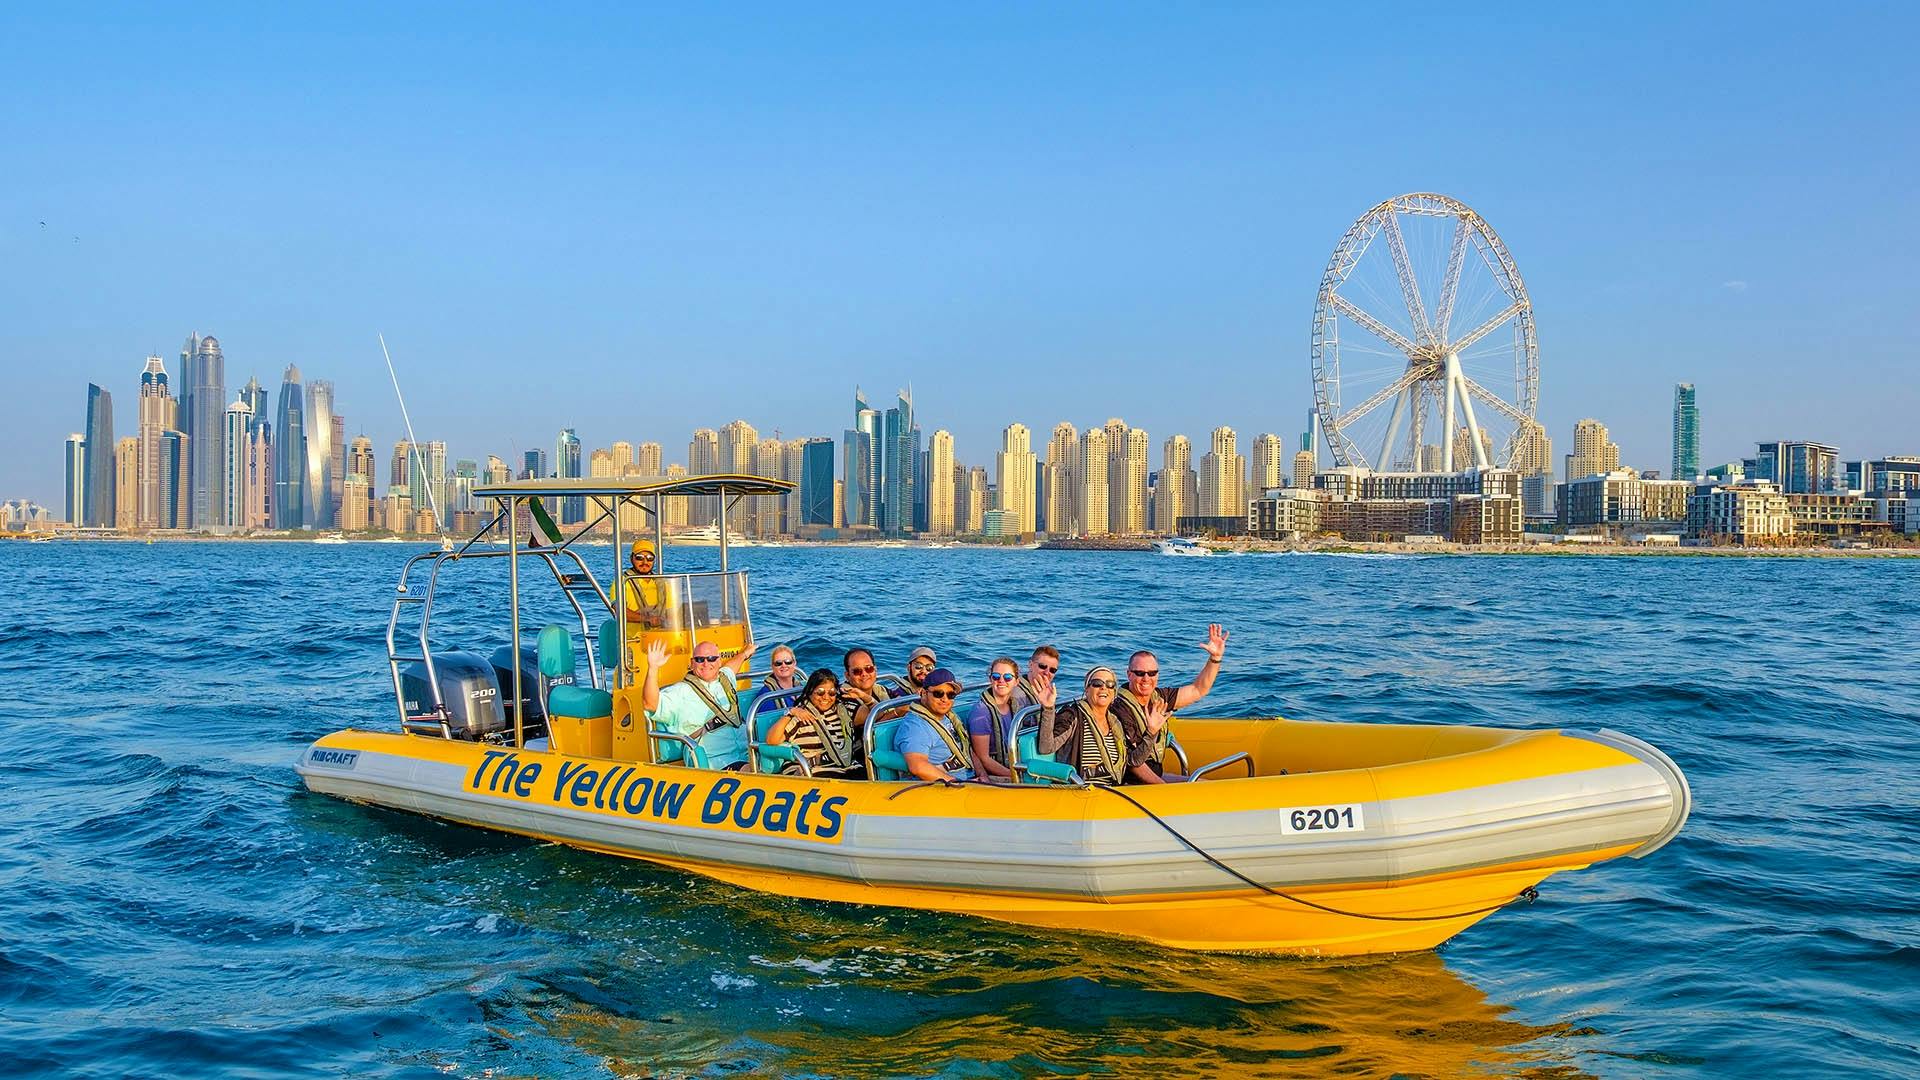 99-minütige Premium-Bootstour durch Dubai Marina, The Palm und Burj Al Arab